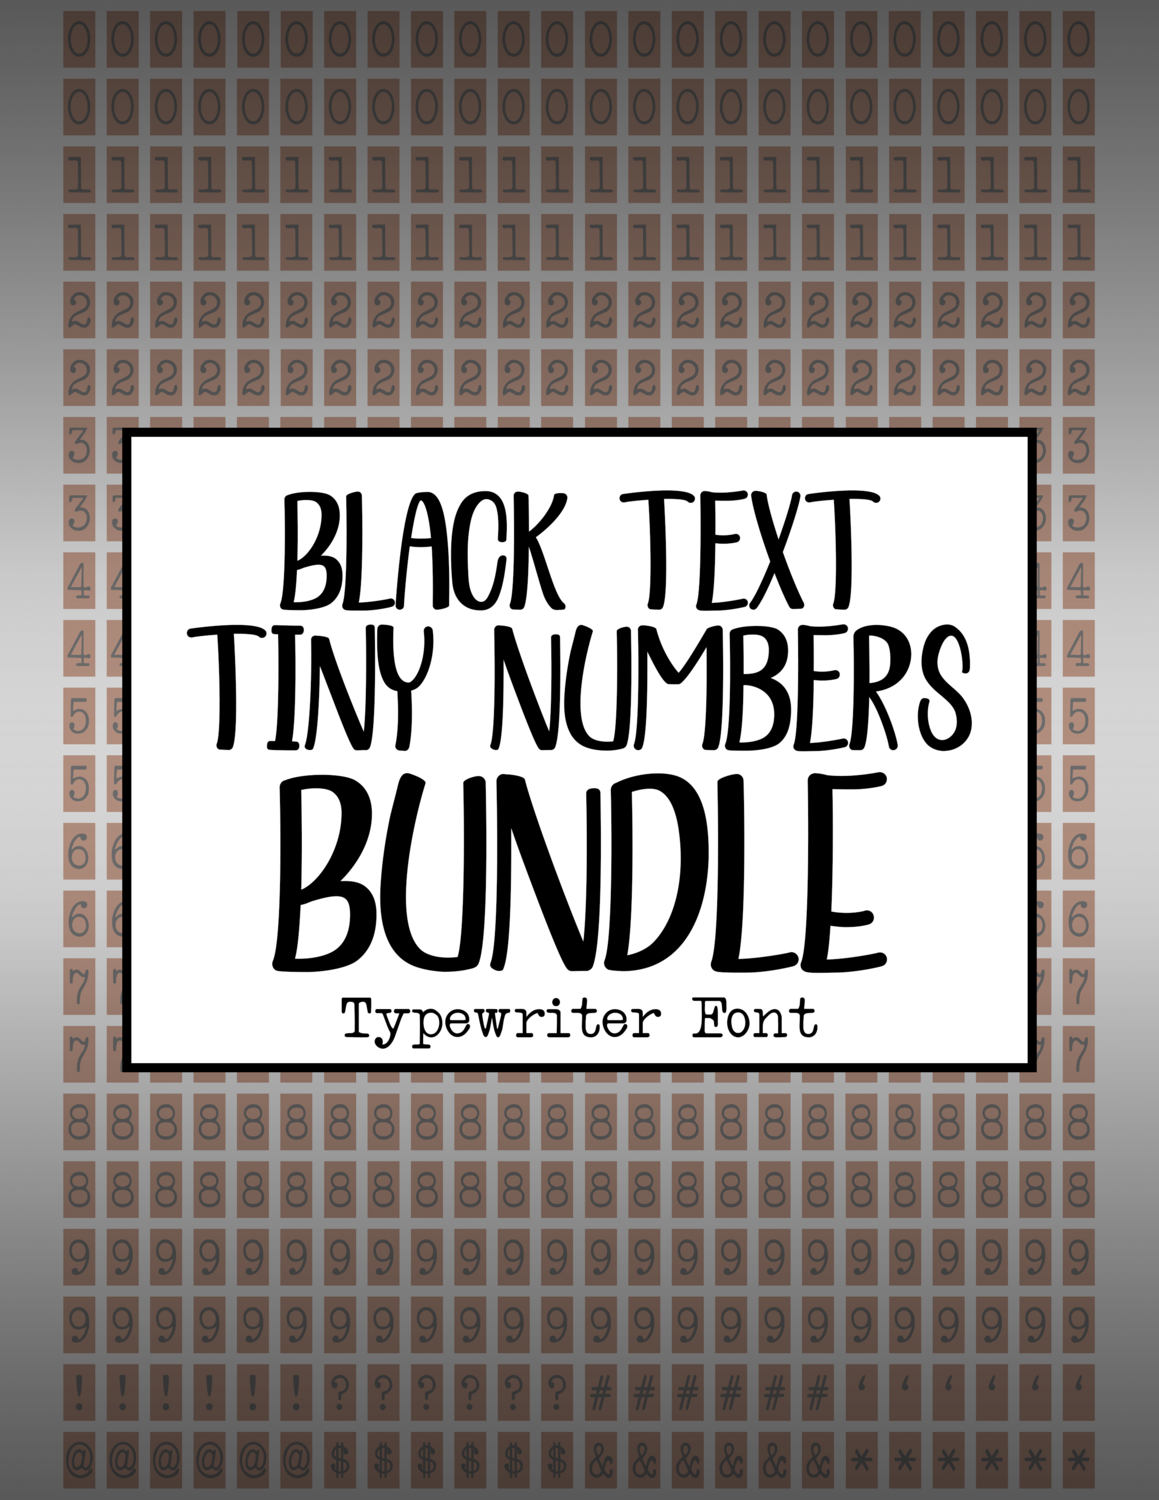 Bundle #87 'Typewriter' Tiny Numbers - Black Text